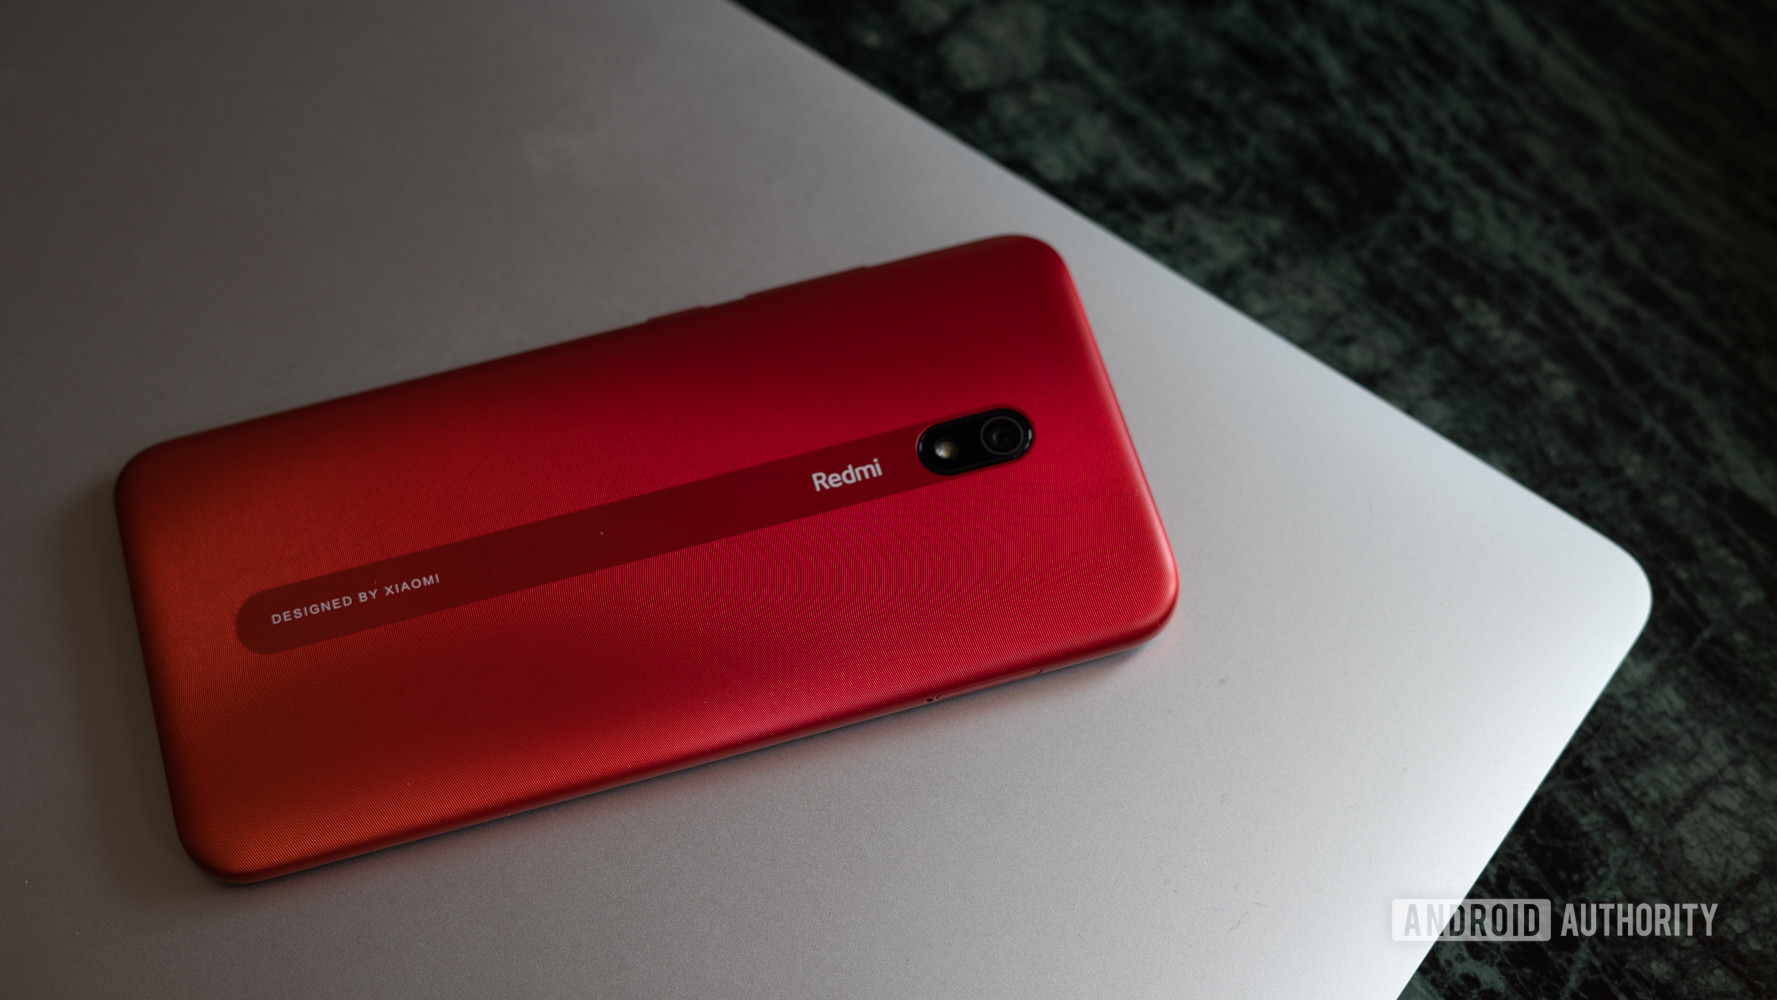 Xiaomi Redmi 8 Google Camera